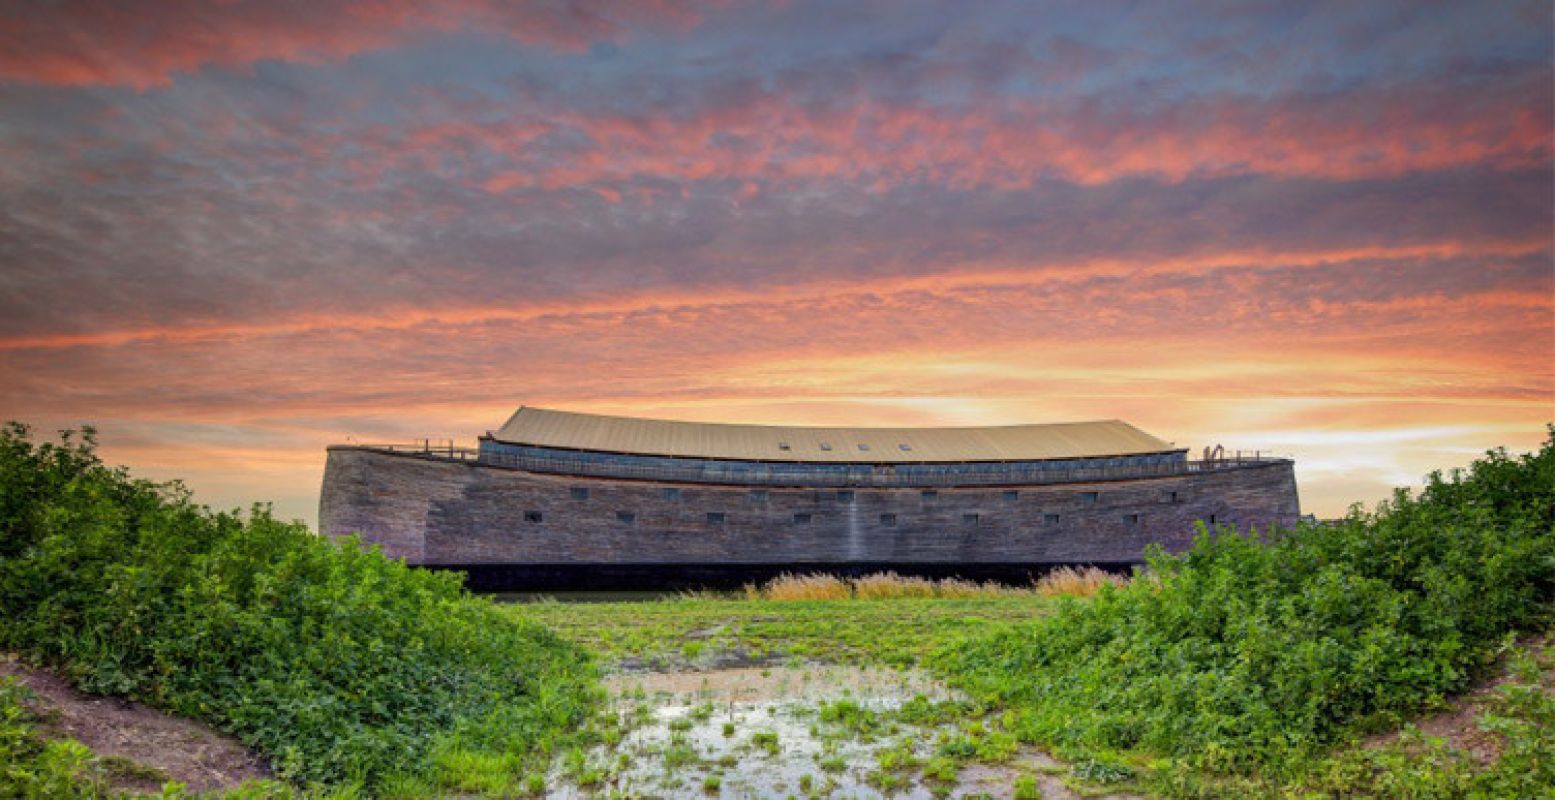 De imposante Ark van Noach.